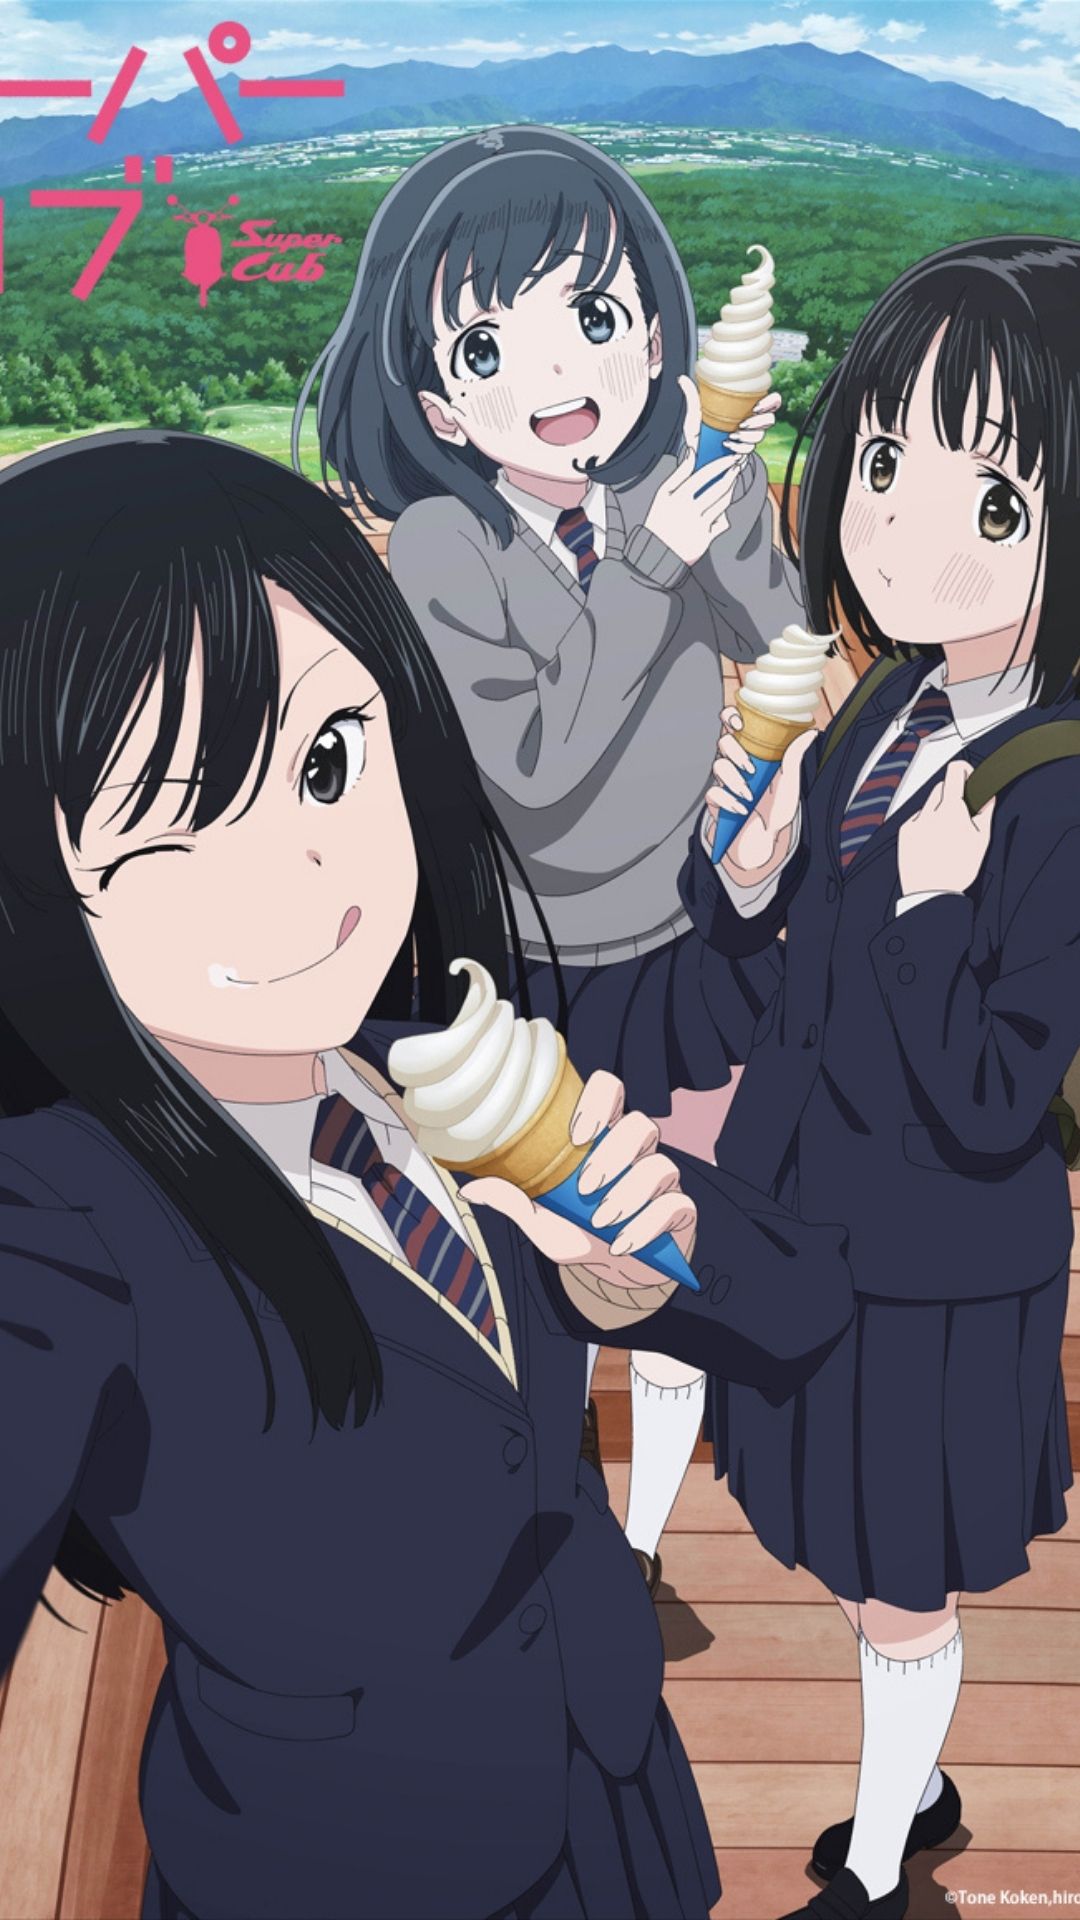 Super Cub Anime's New Visual Previews the Wholesome Life of Koguma, Reiko, and Shii